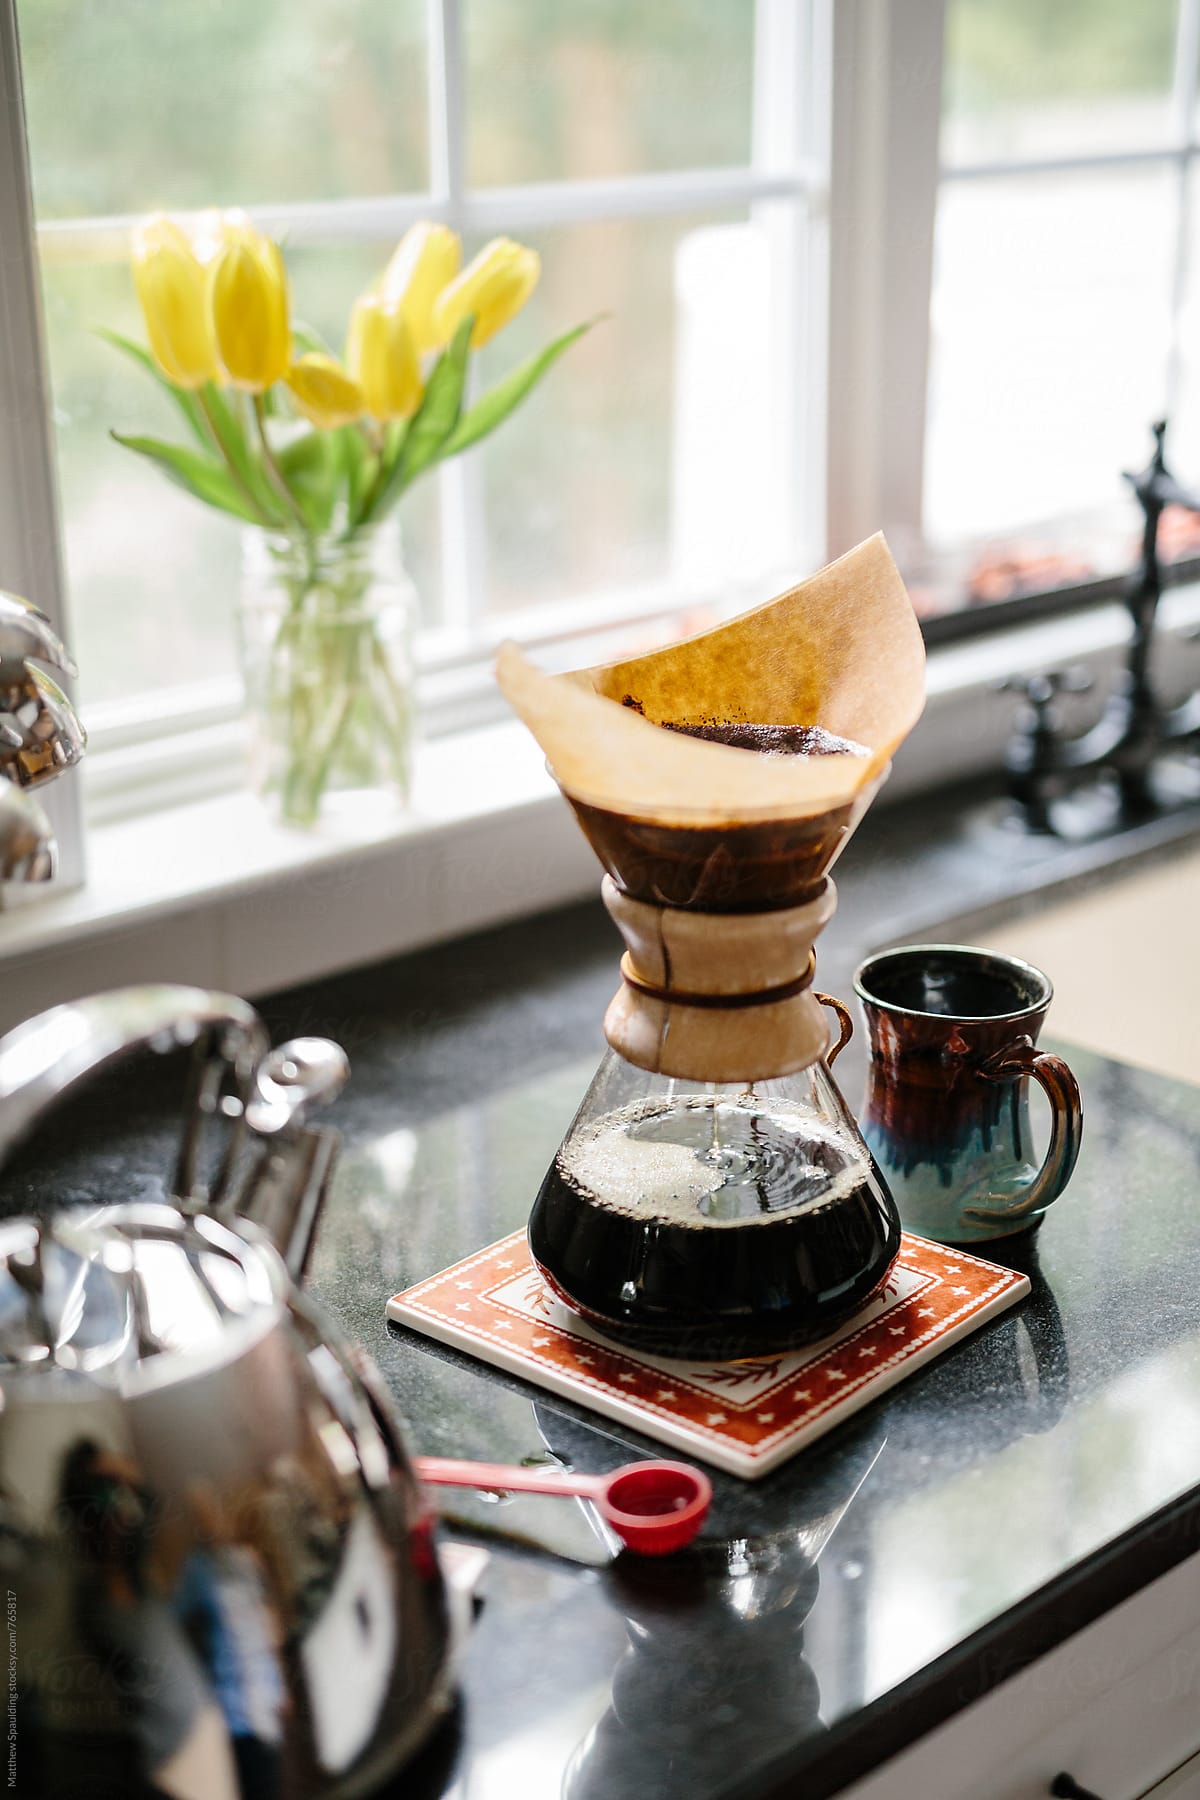 Fresh coffee dripping through filter on kitchen counter